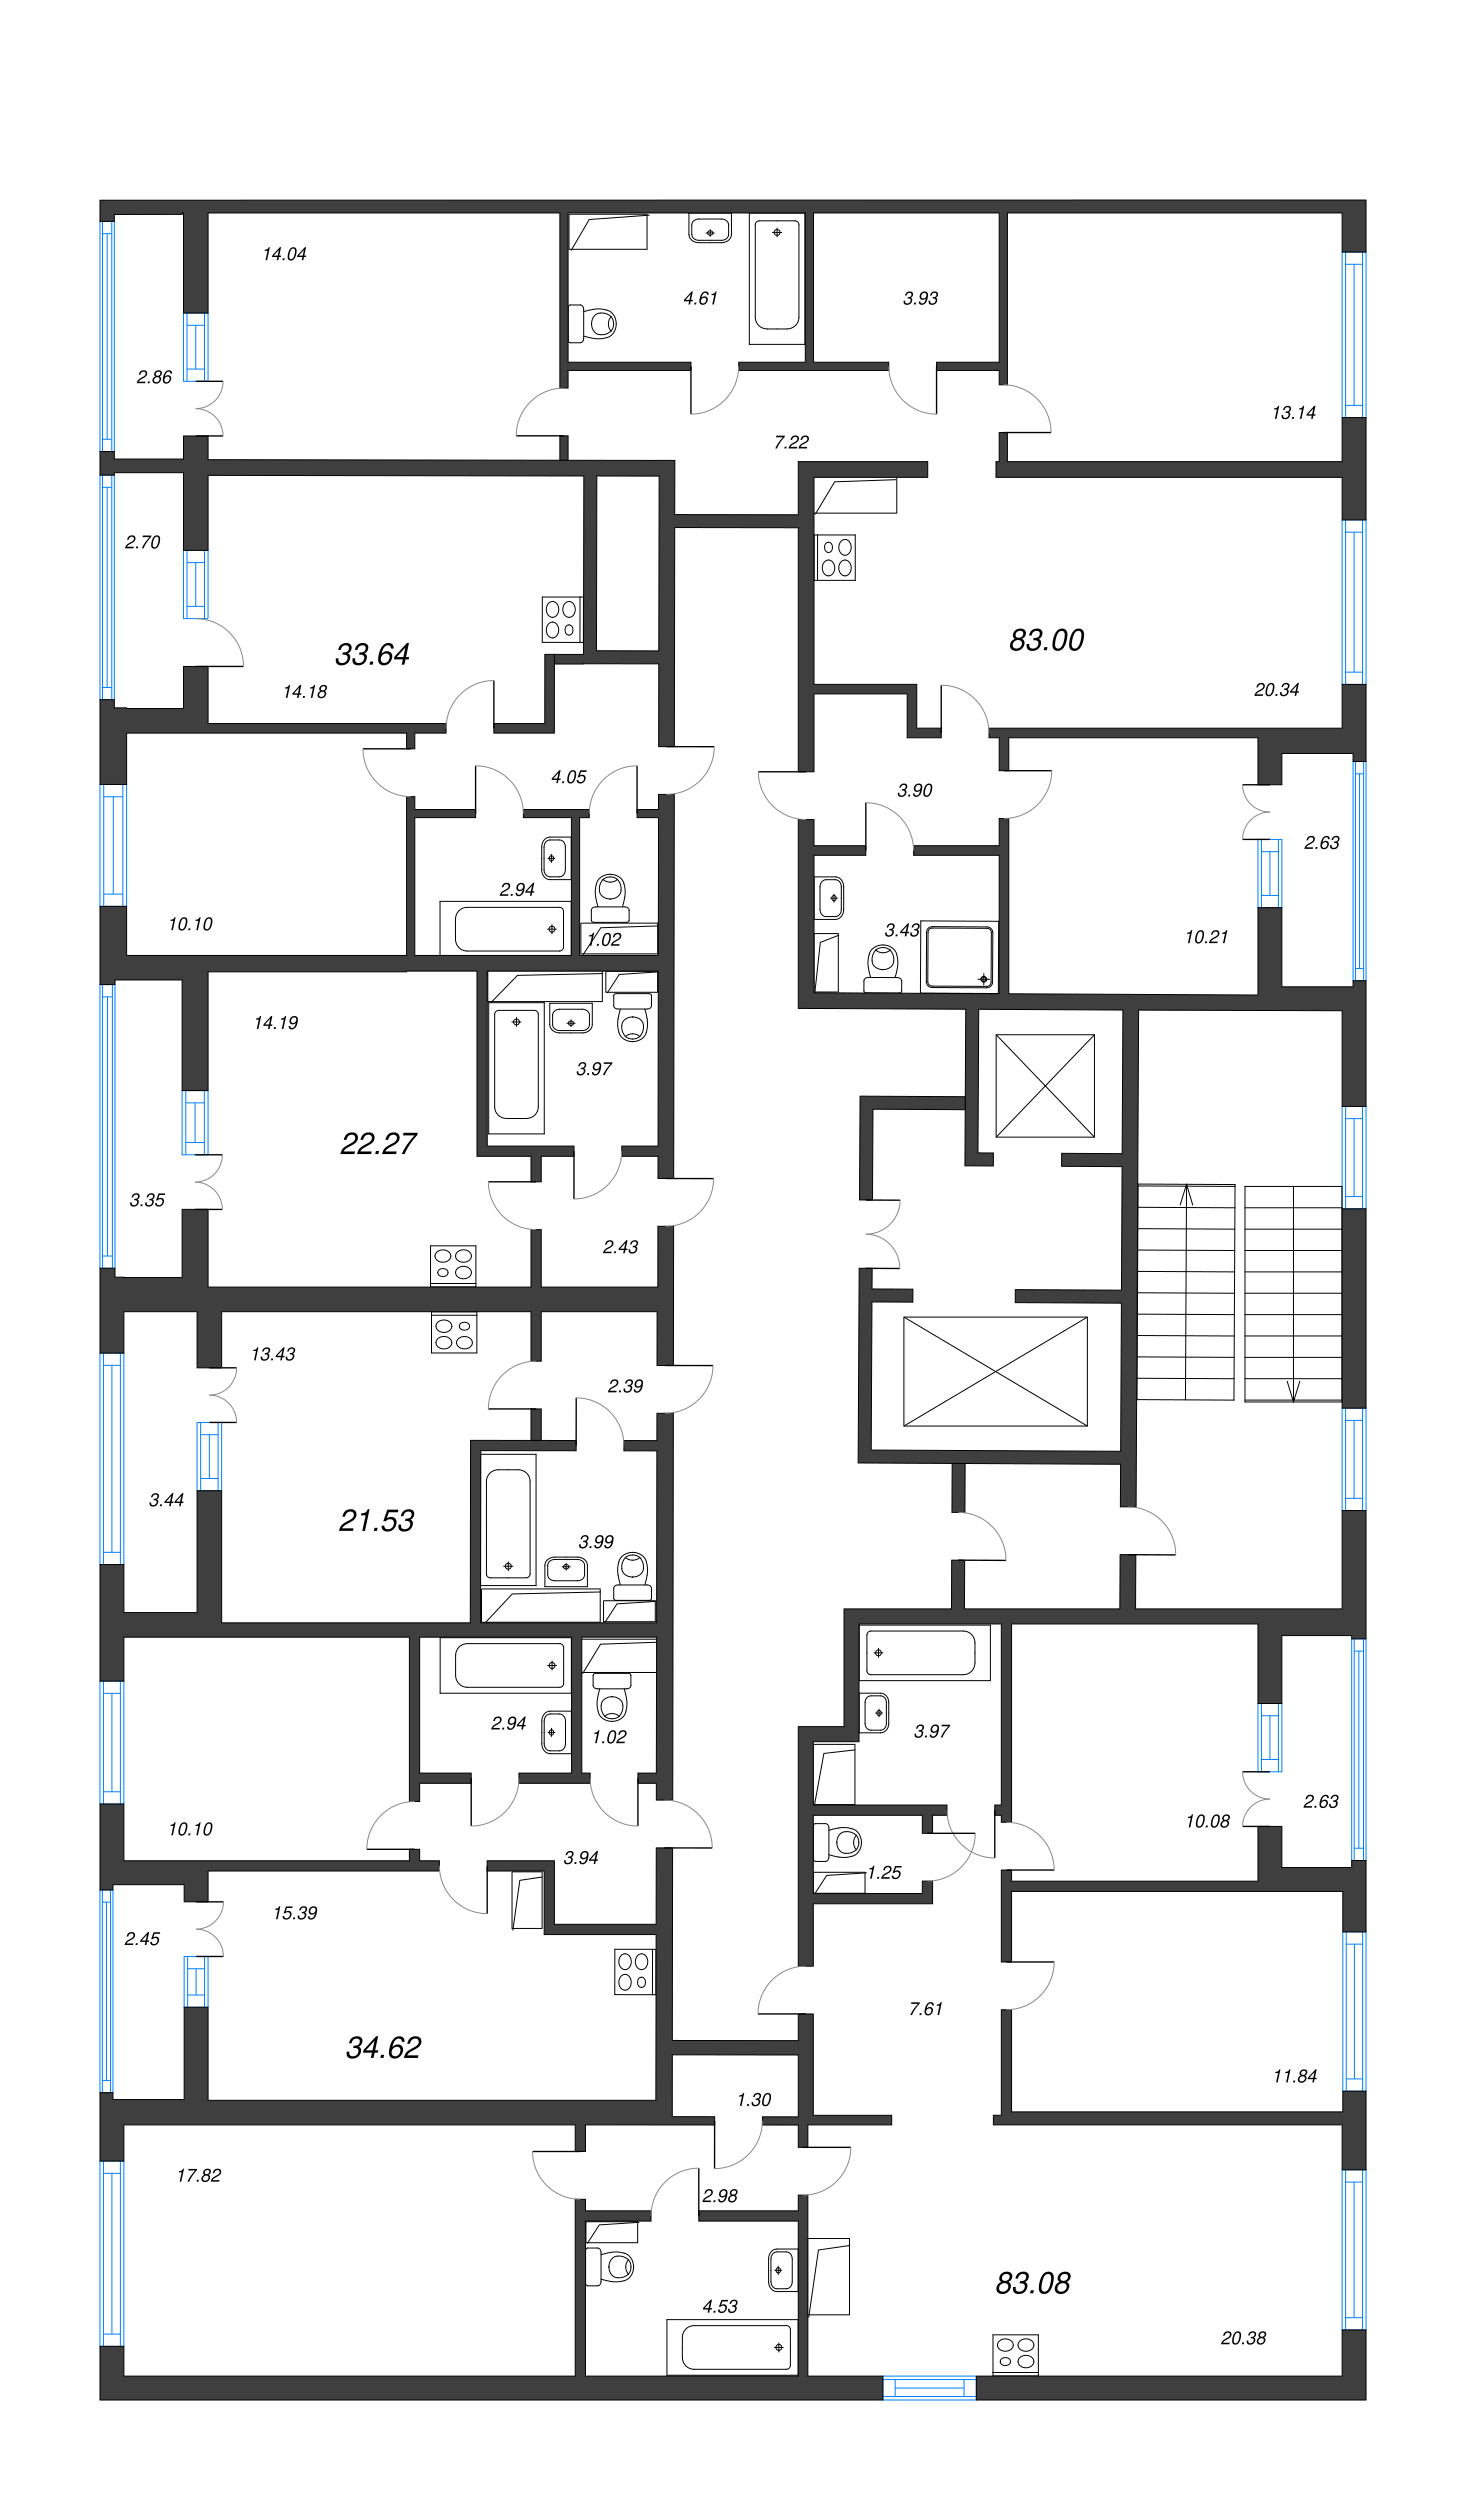 2-комнатная (Евро) квартира, 34.62 м² - планировка этажа